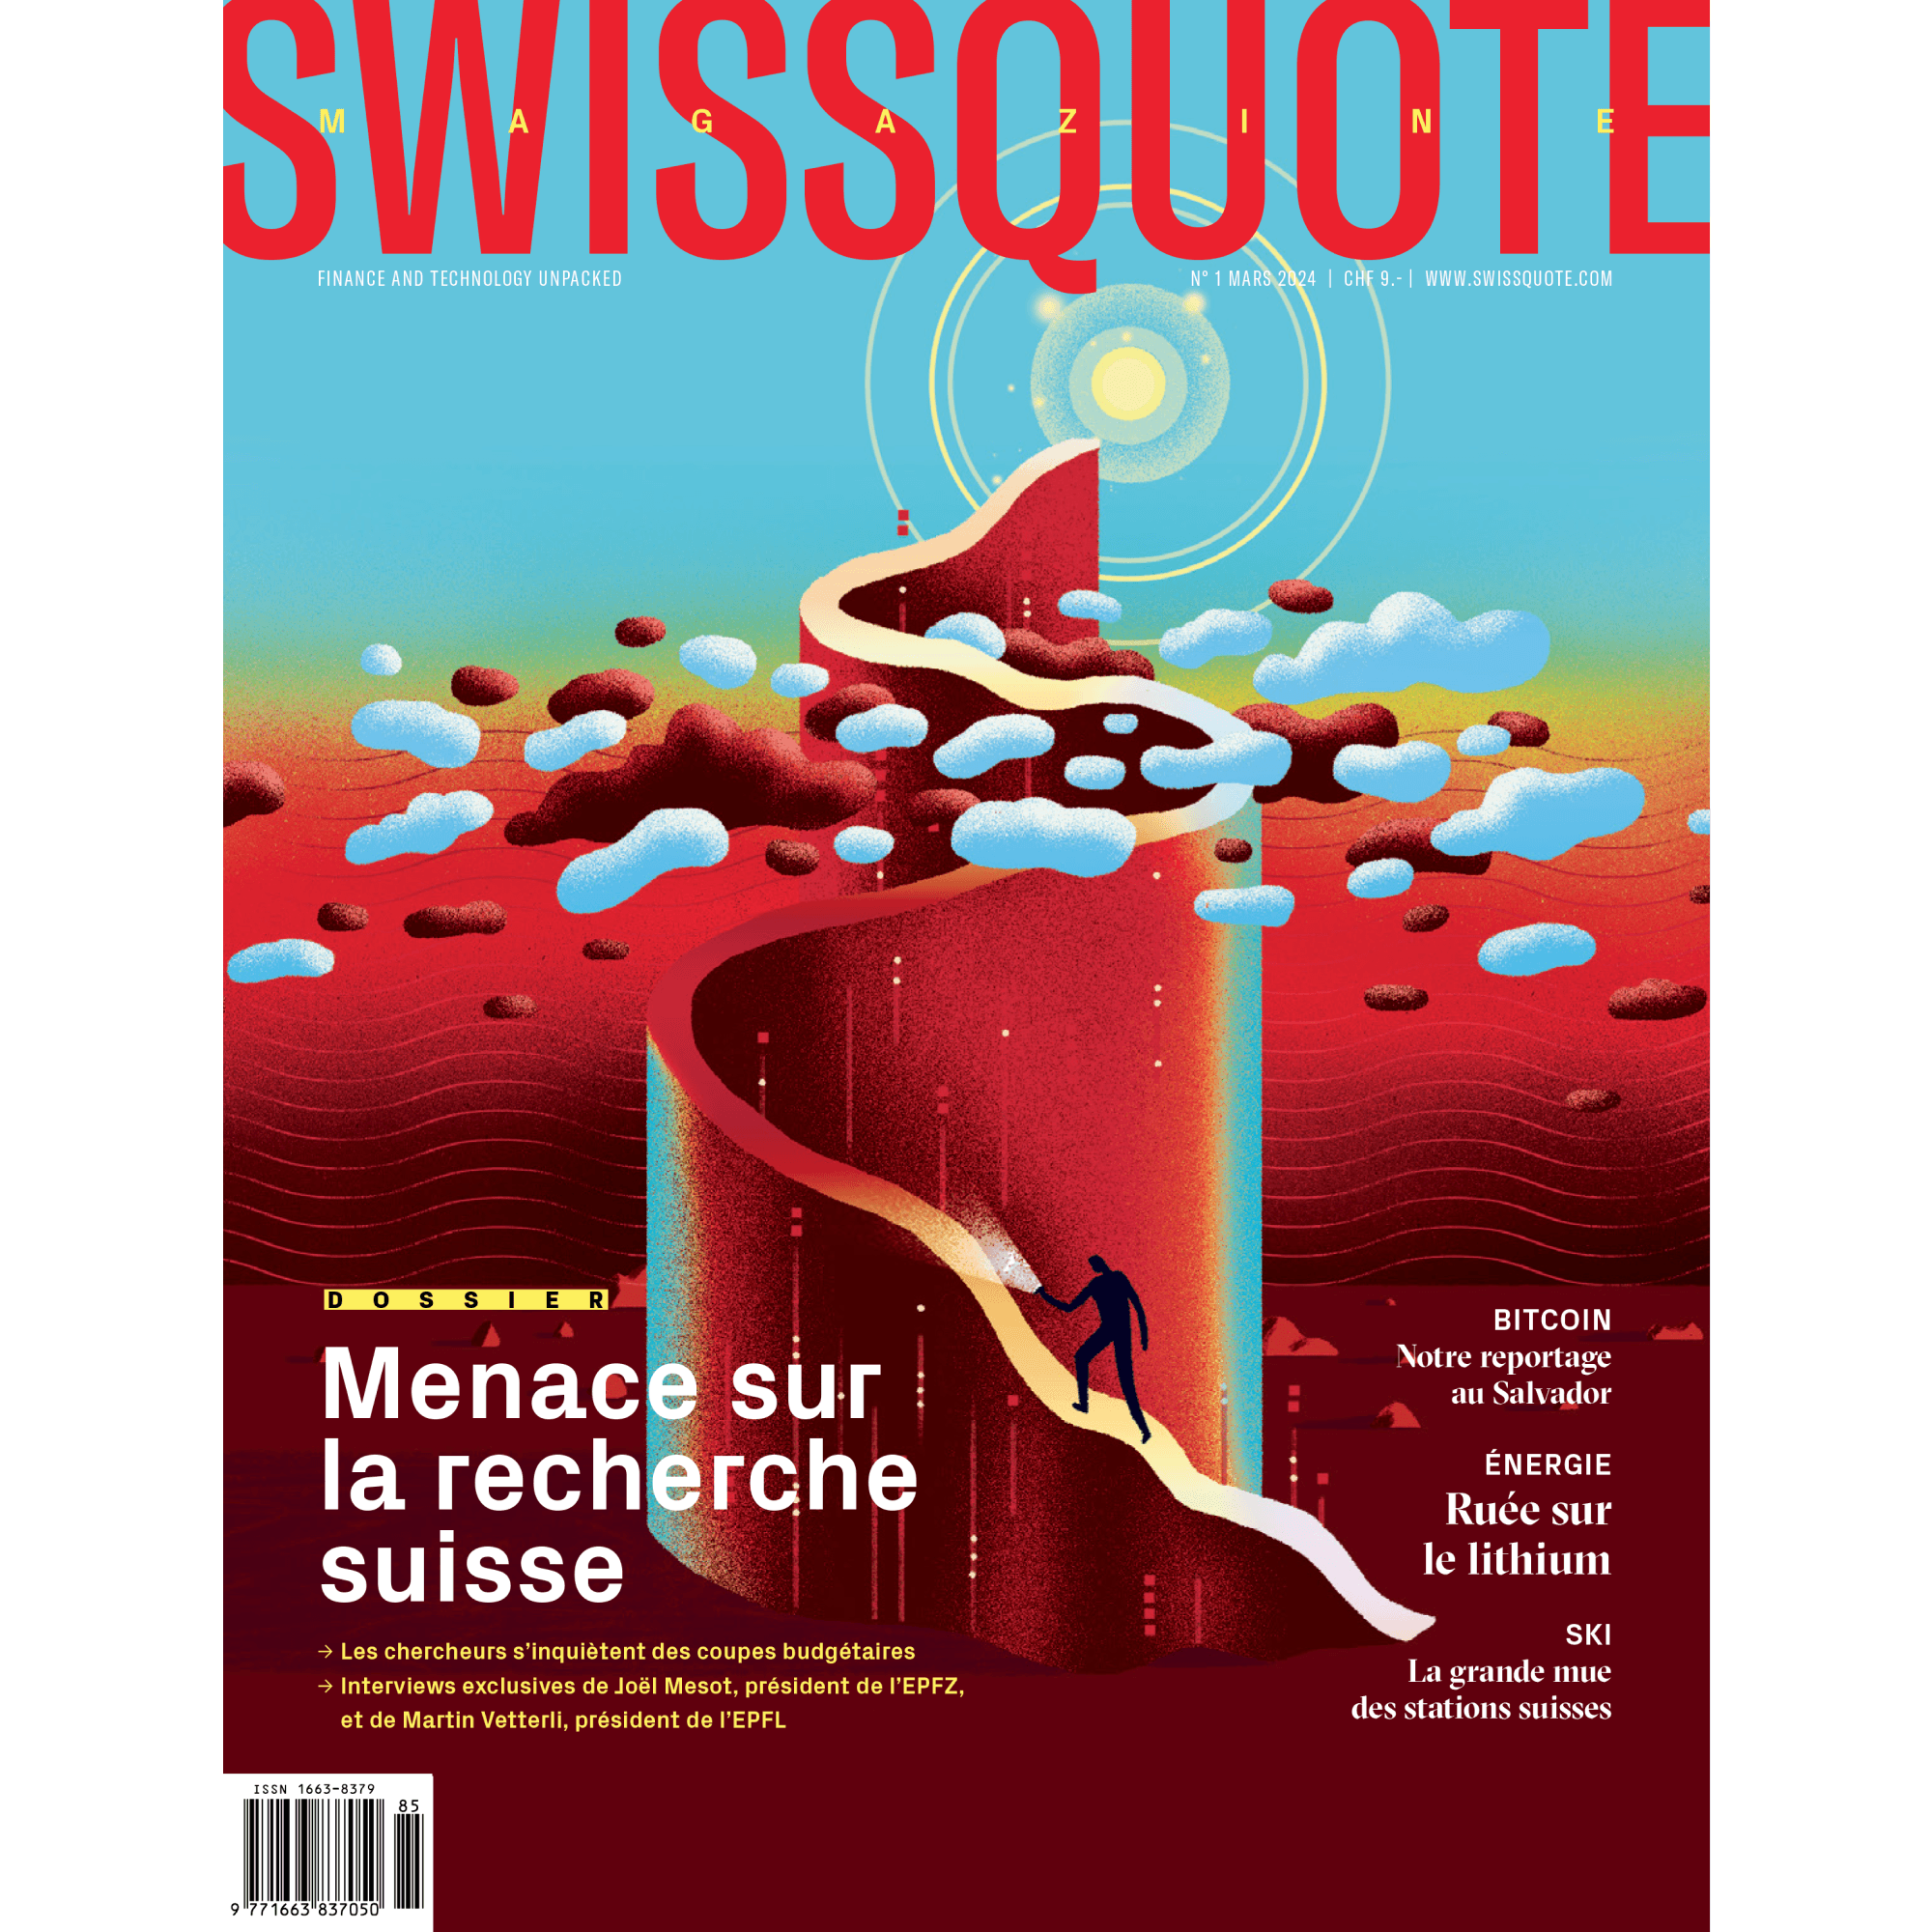 Swissquote magazine issue 84